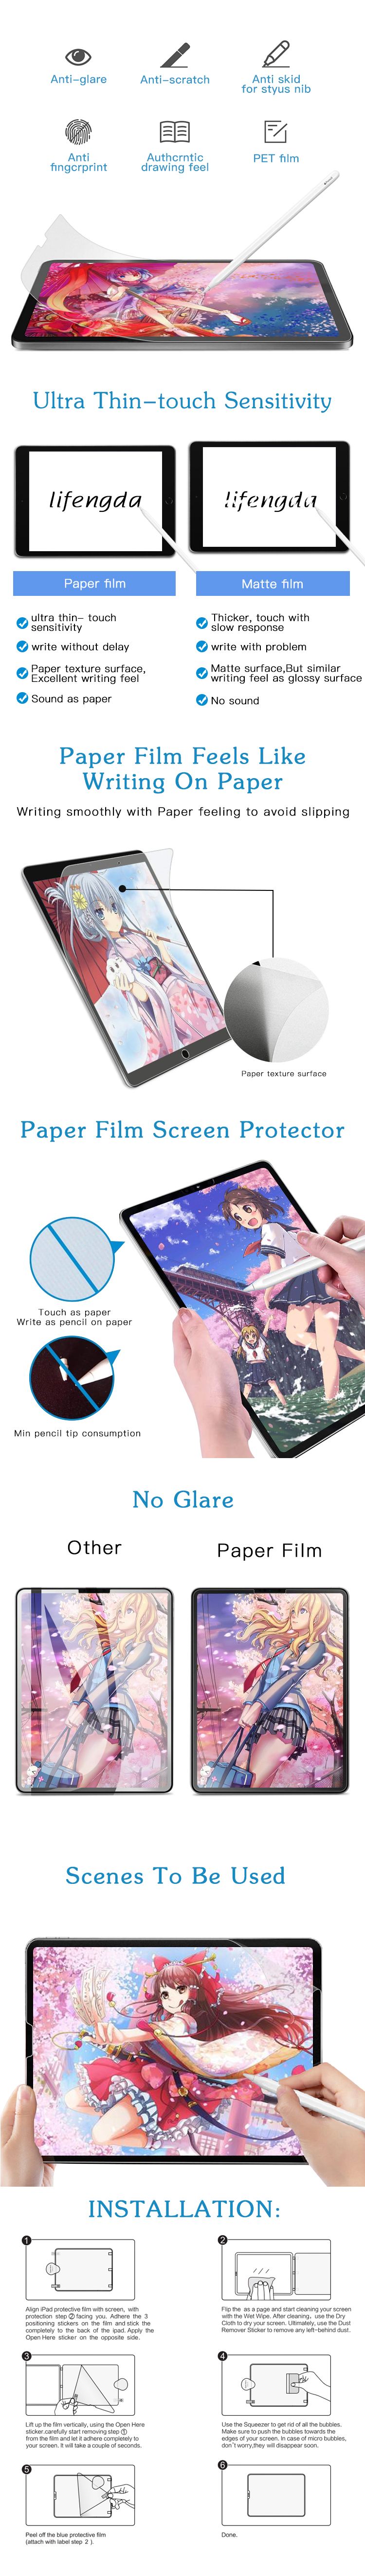 paper feel screen protector for Wacom tablet